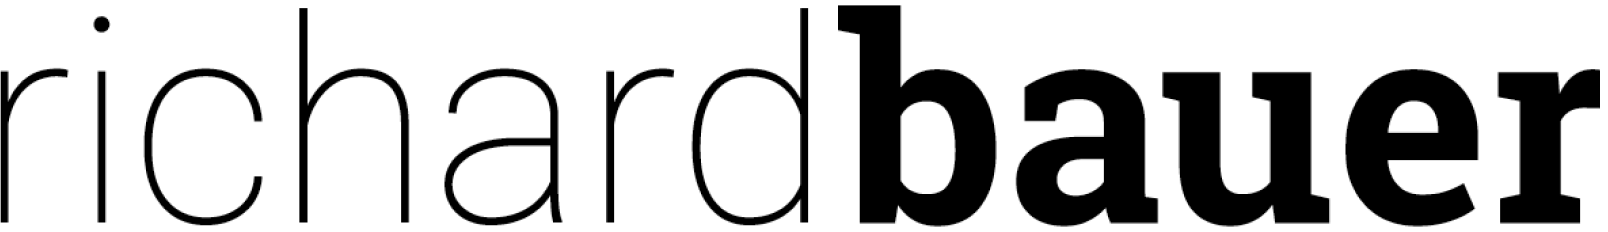 richard bauer logo